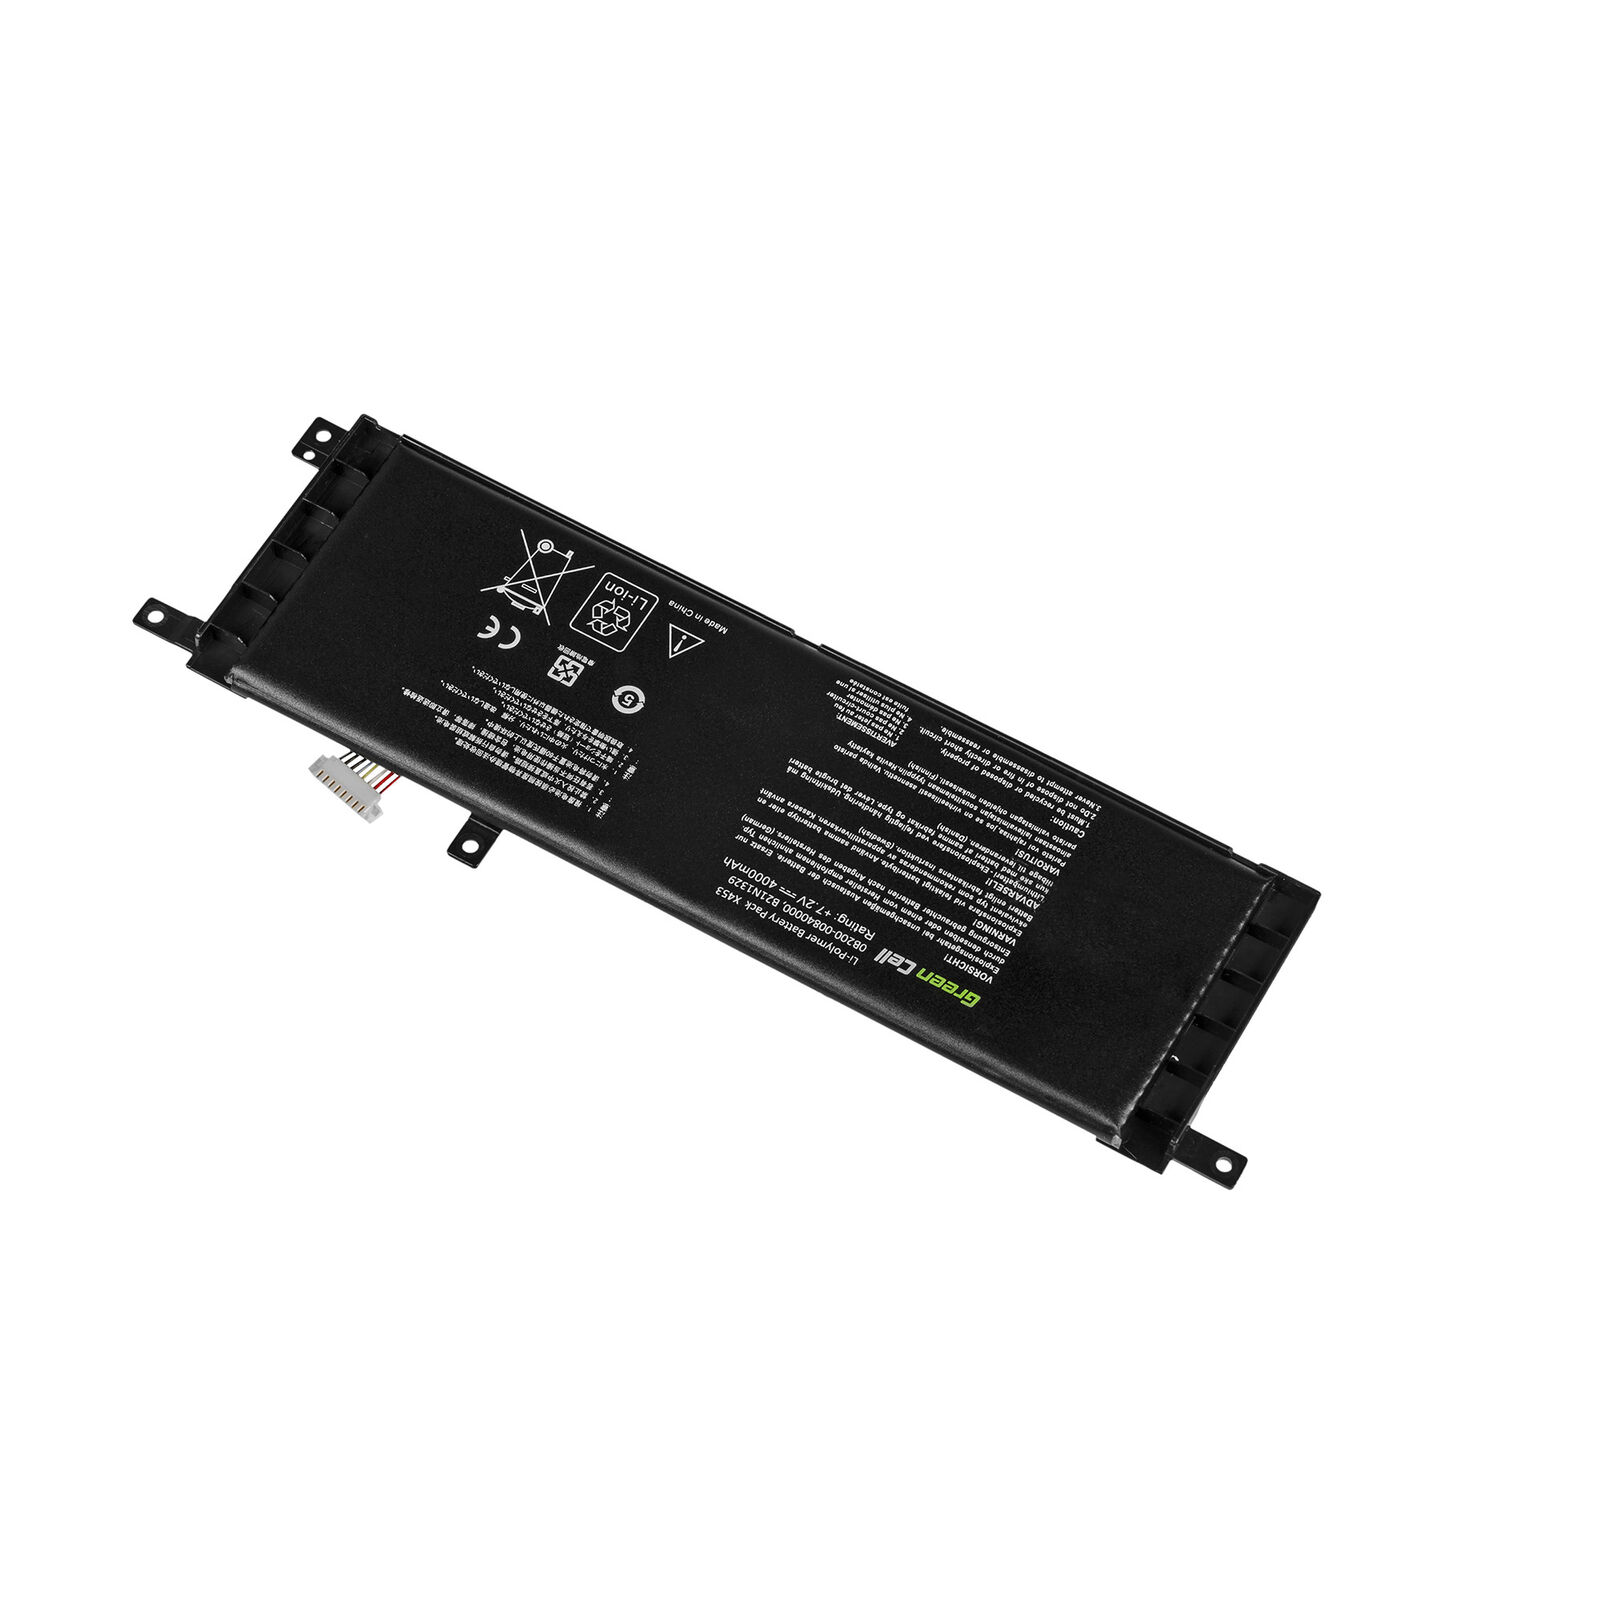 Asus R413M R413MA R413MA-BING R413MA-BING-WX255B compatible battery